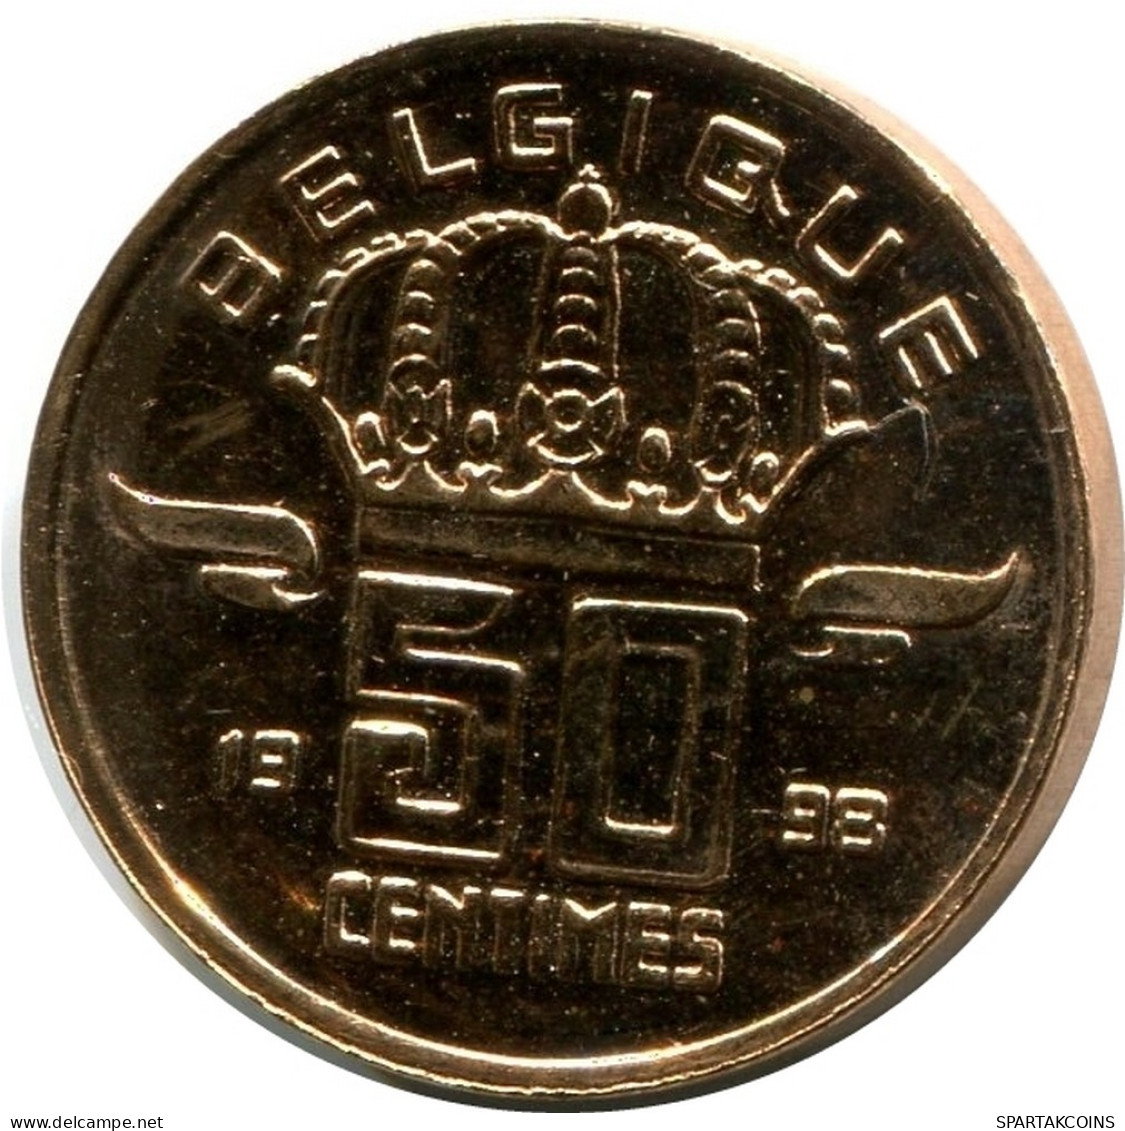 50 CENTIMES 1998 BELGIUM Coin UNC #M10013.U - 50 Cents